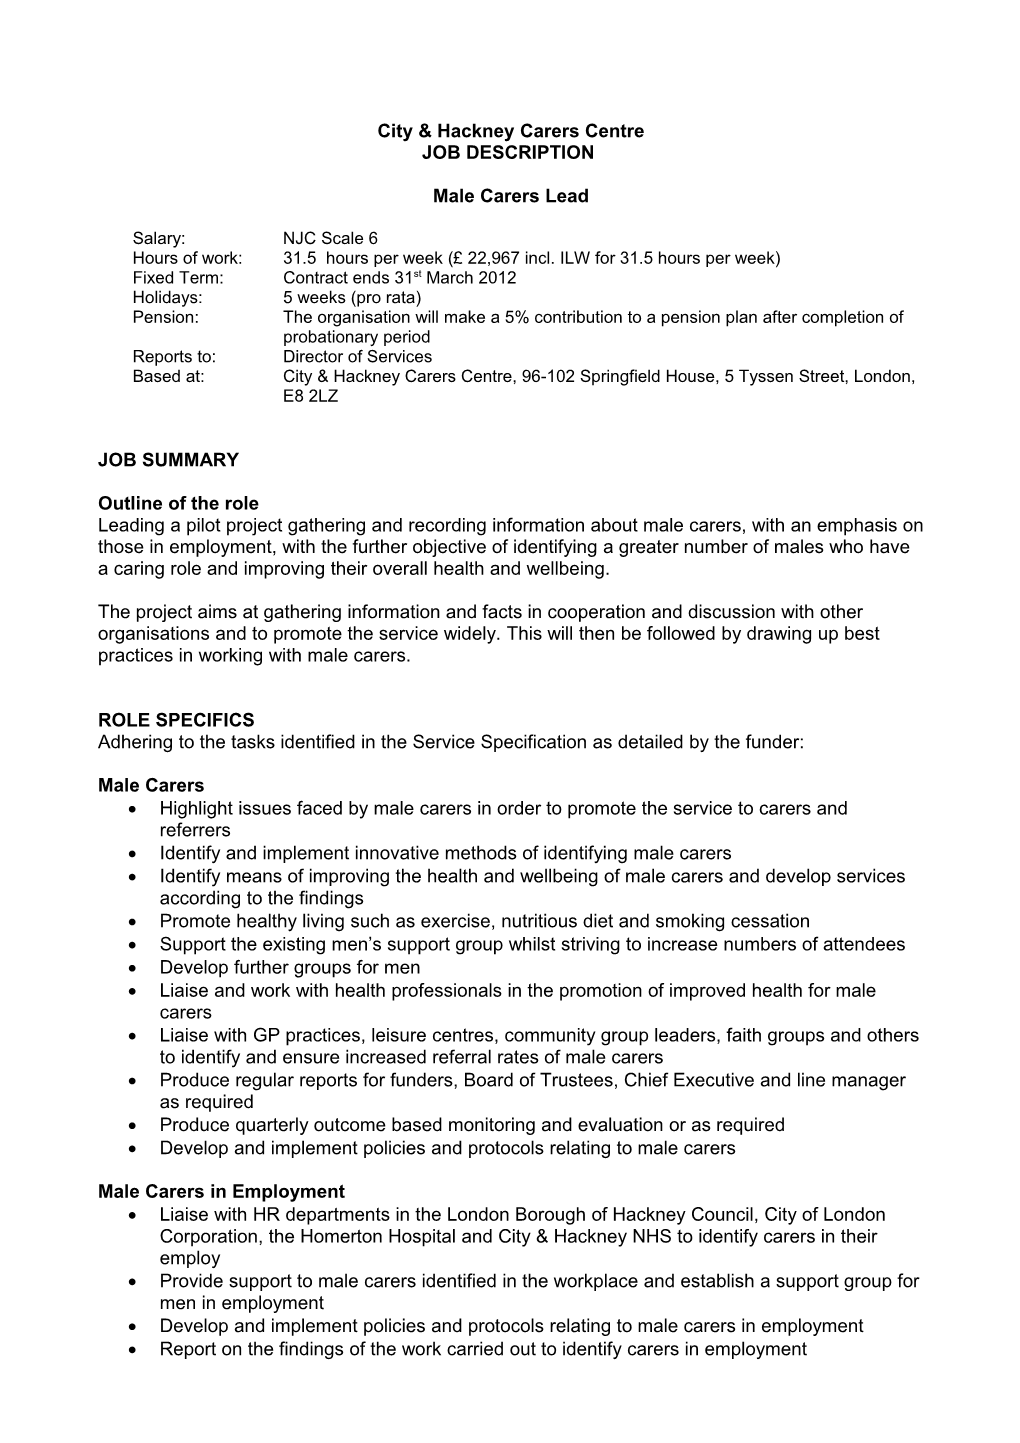 Hackney Carers Centre	Job Description - Director